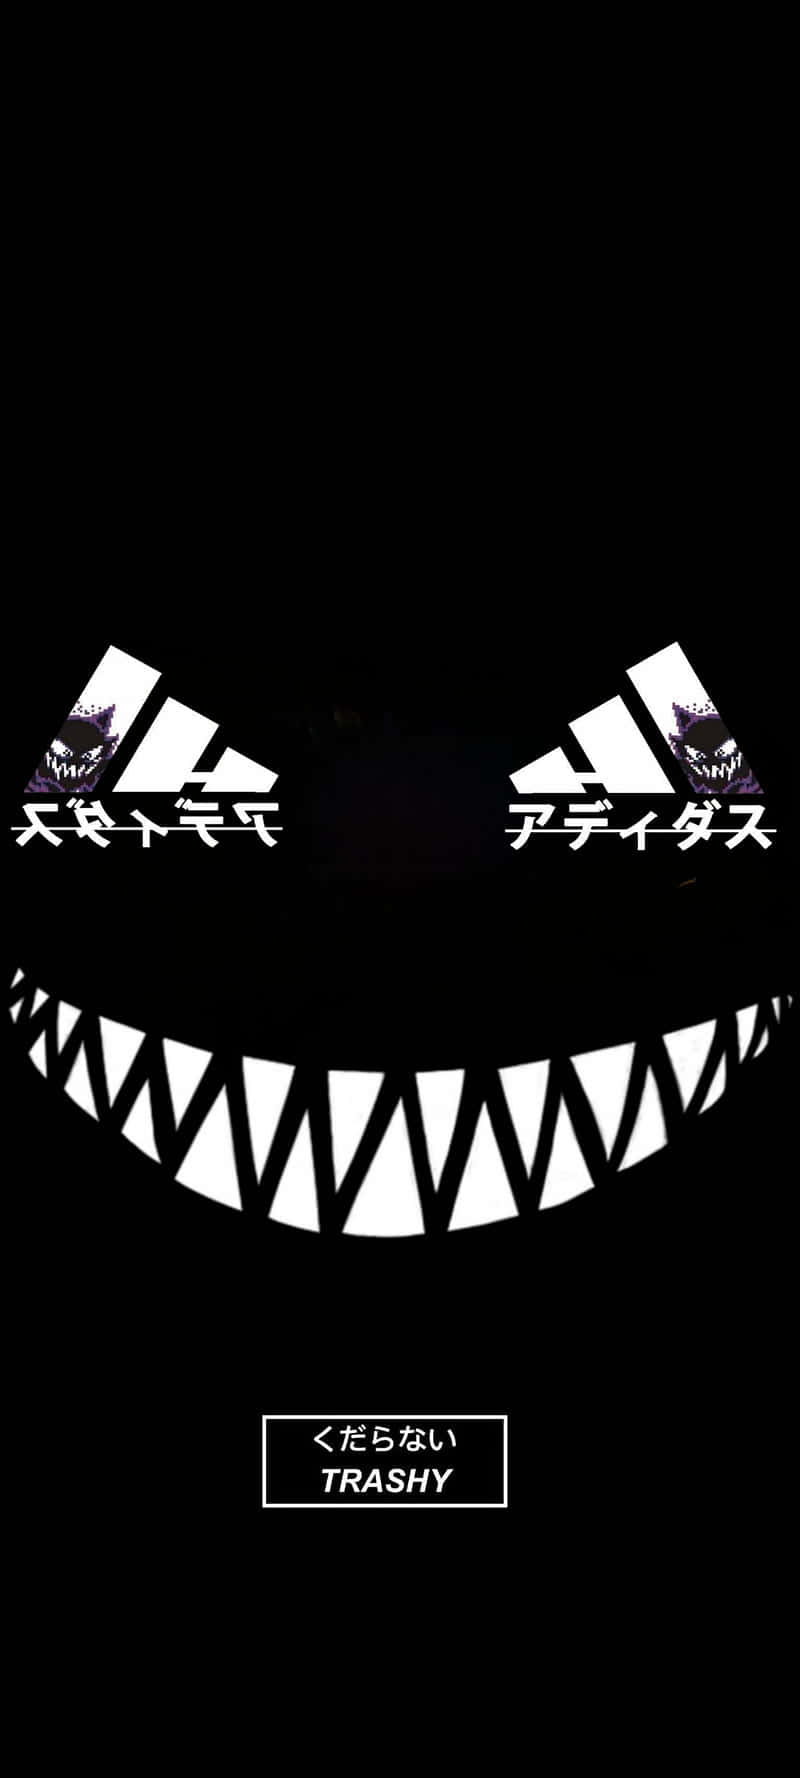 Japanese Trash Gang Logo Wallpaper